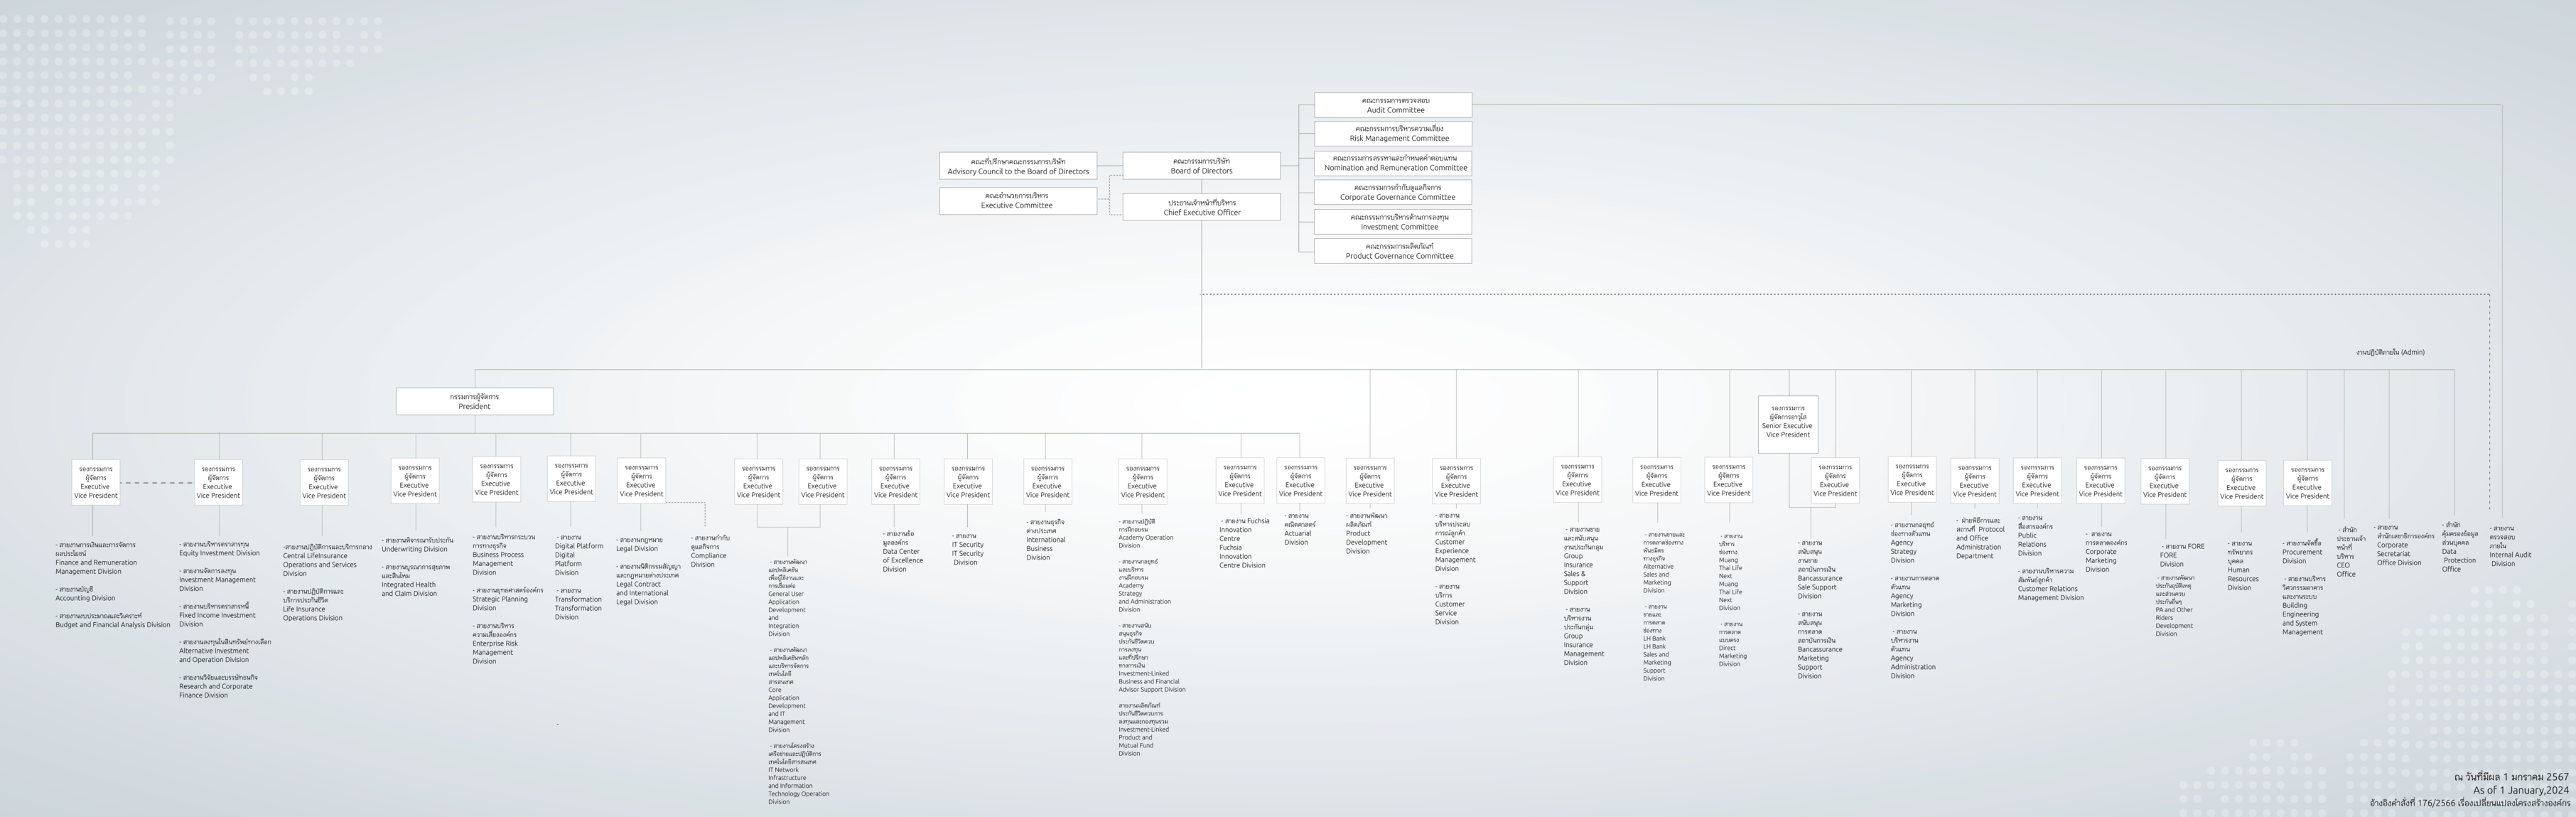 Organizational Chart Structure